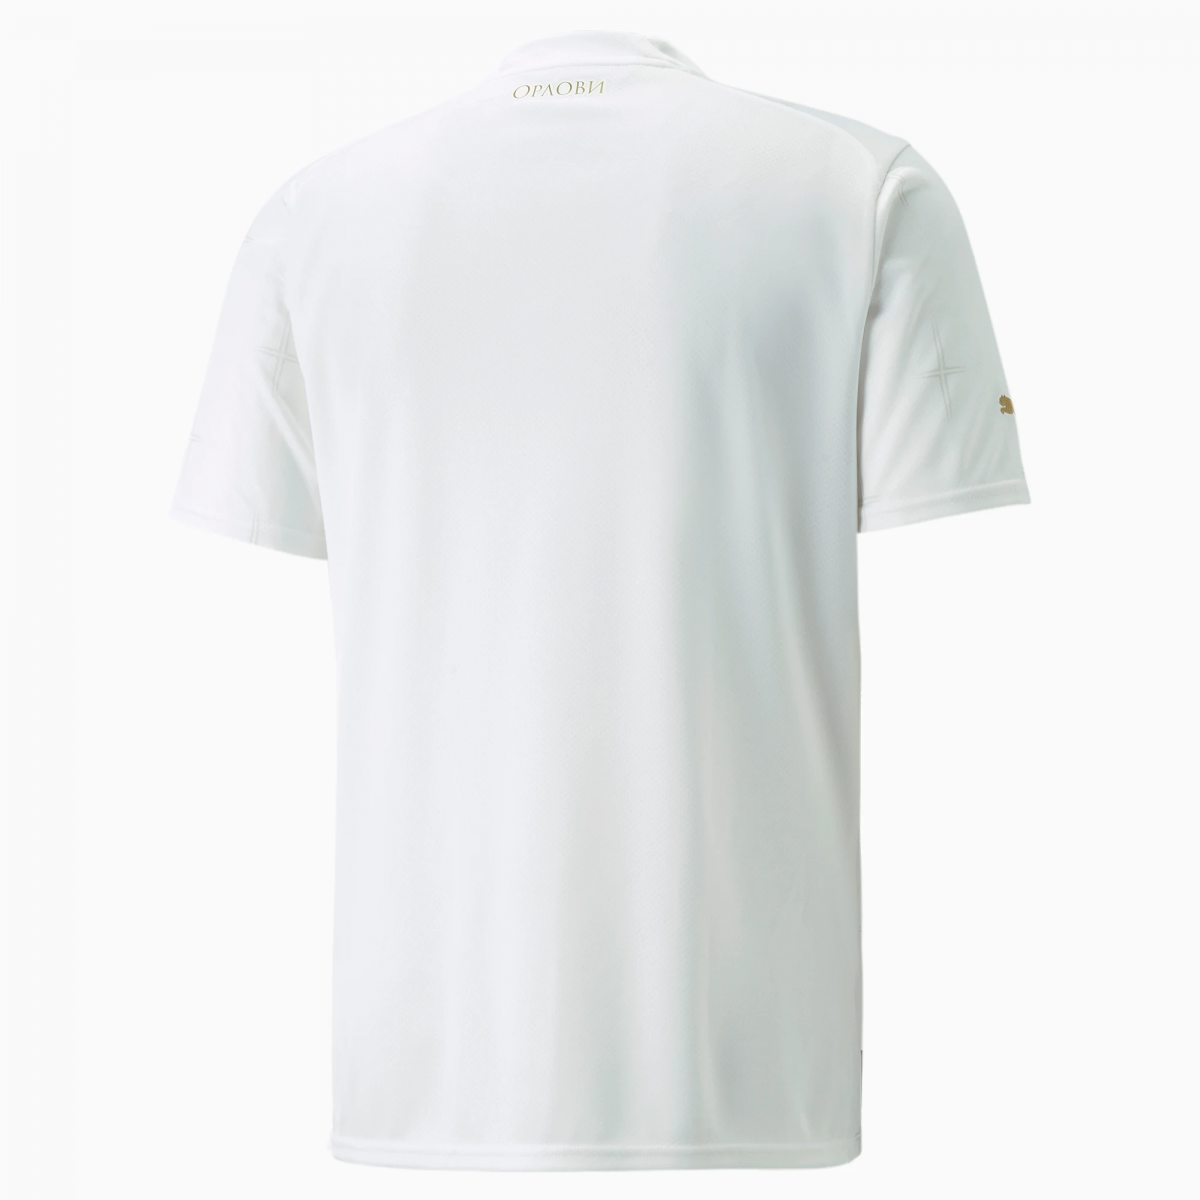 Camisa Puma Servia Ii - masculino - branco Branco 2